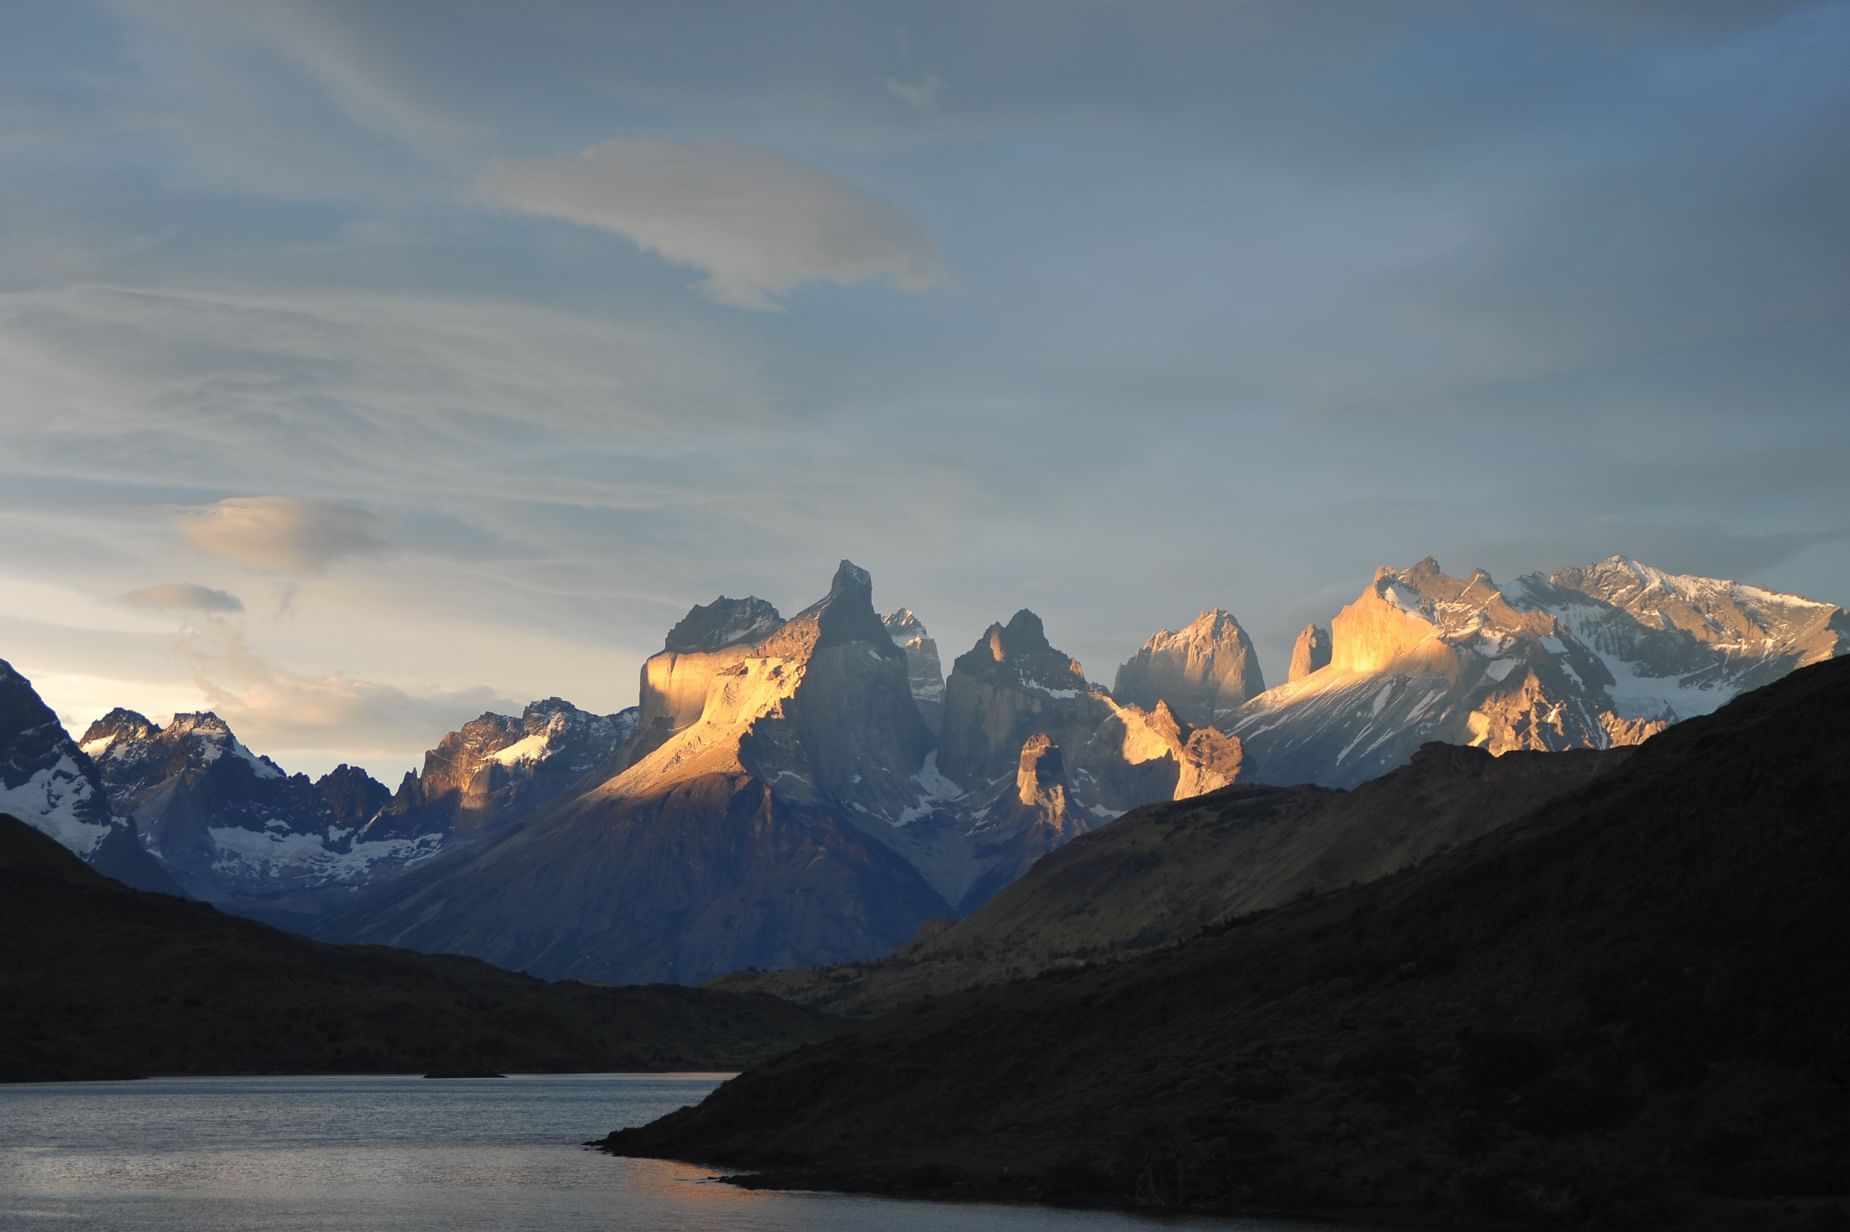 View of Faraway mountains near The Singular Patagonia